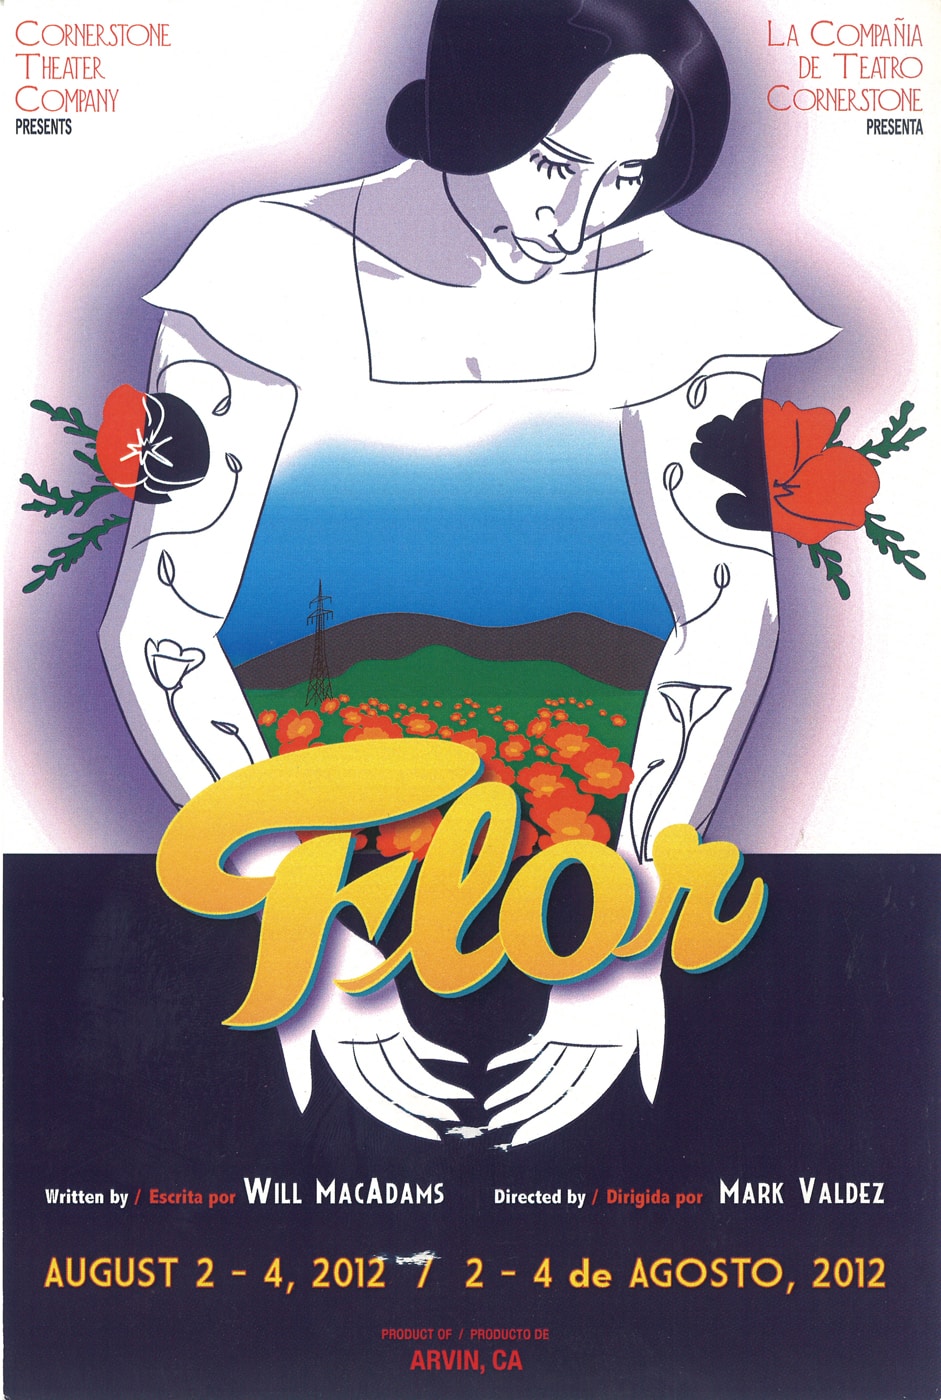 Flor, Cornerstone Theater Company, Arvin, buttermobile